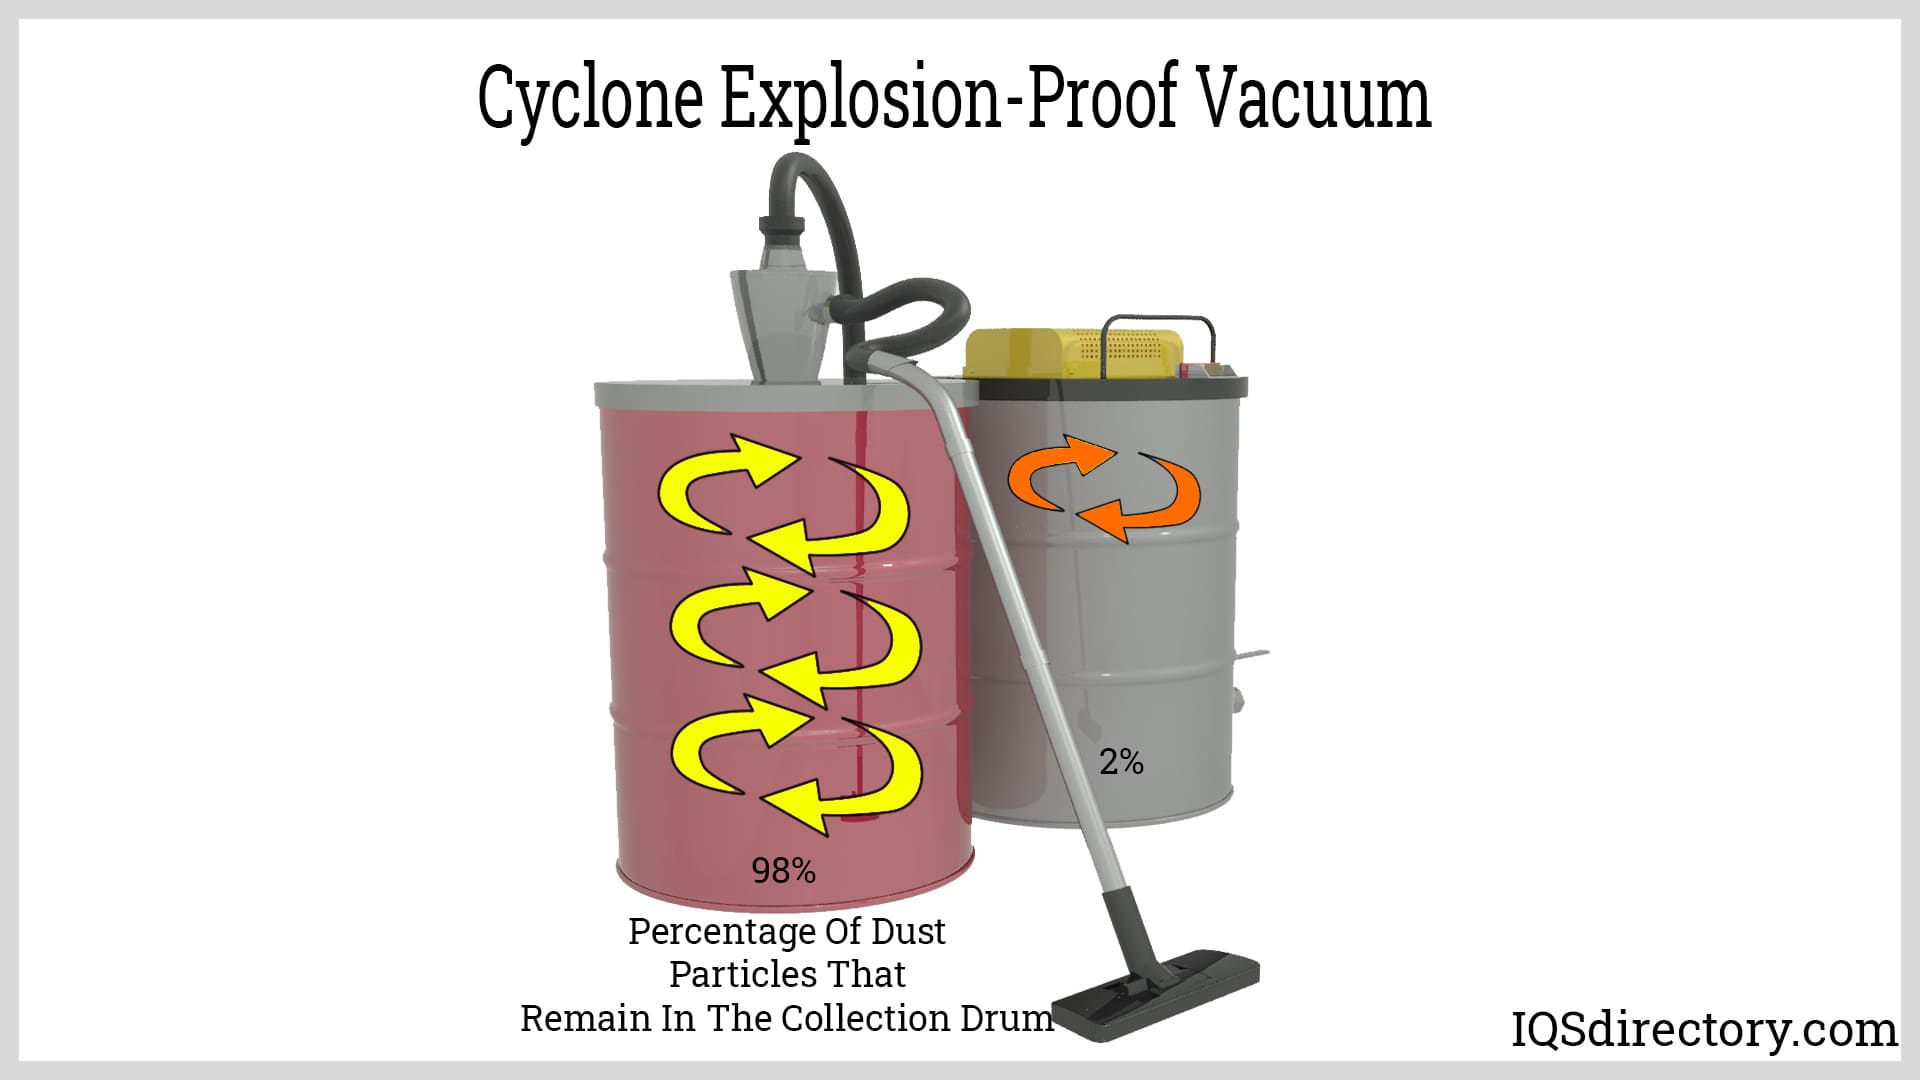 Cyclone Explosion-Proof Vacuum